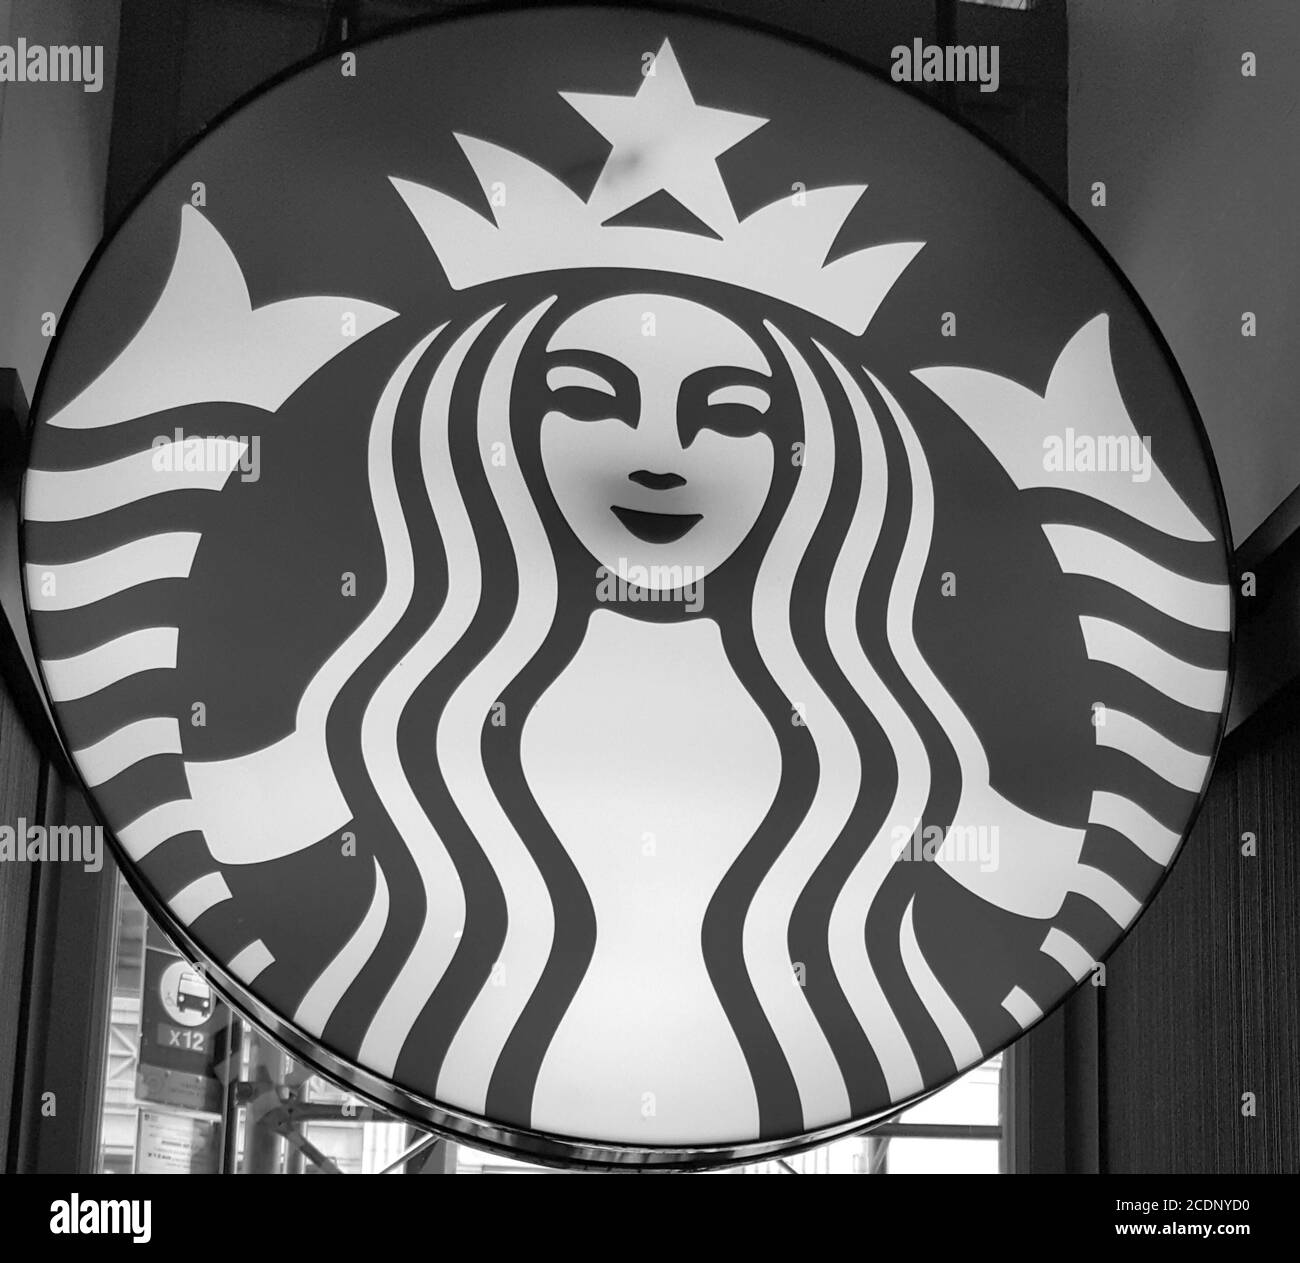 Starbucks coffee logo, black and white image, New York City, United States Stock Photo